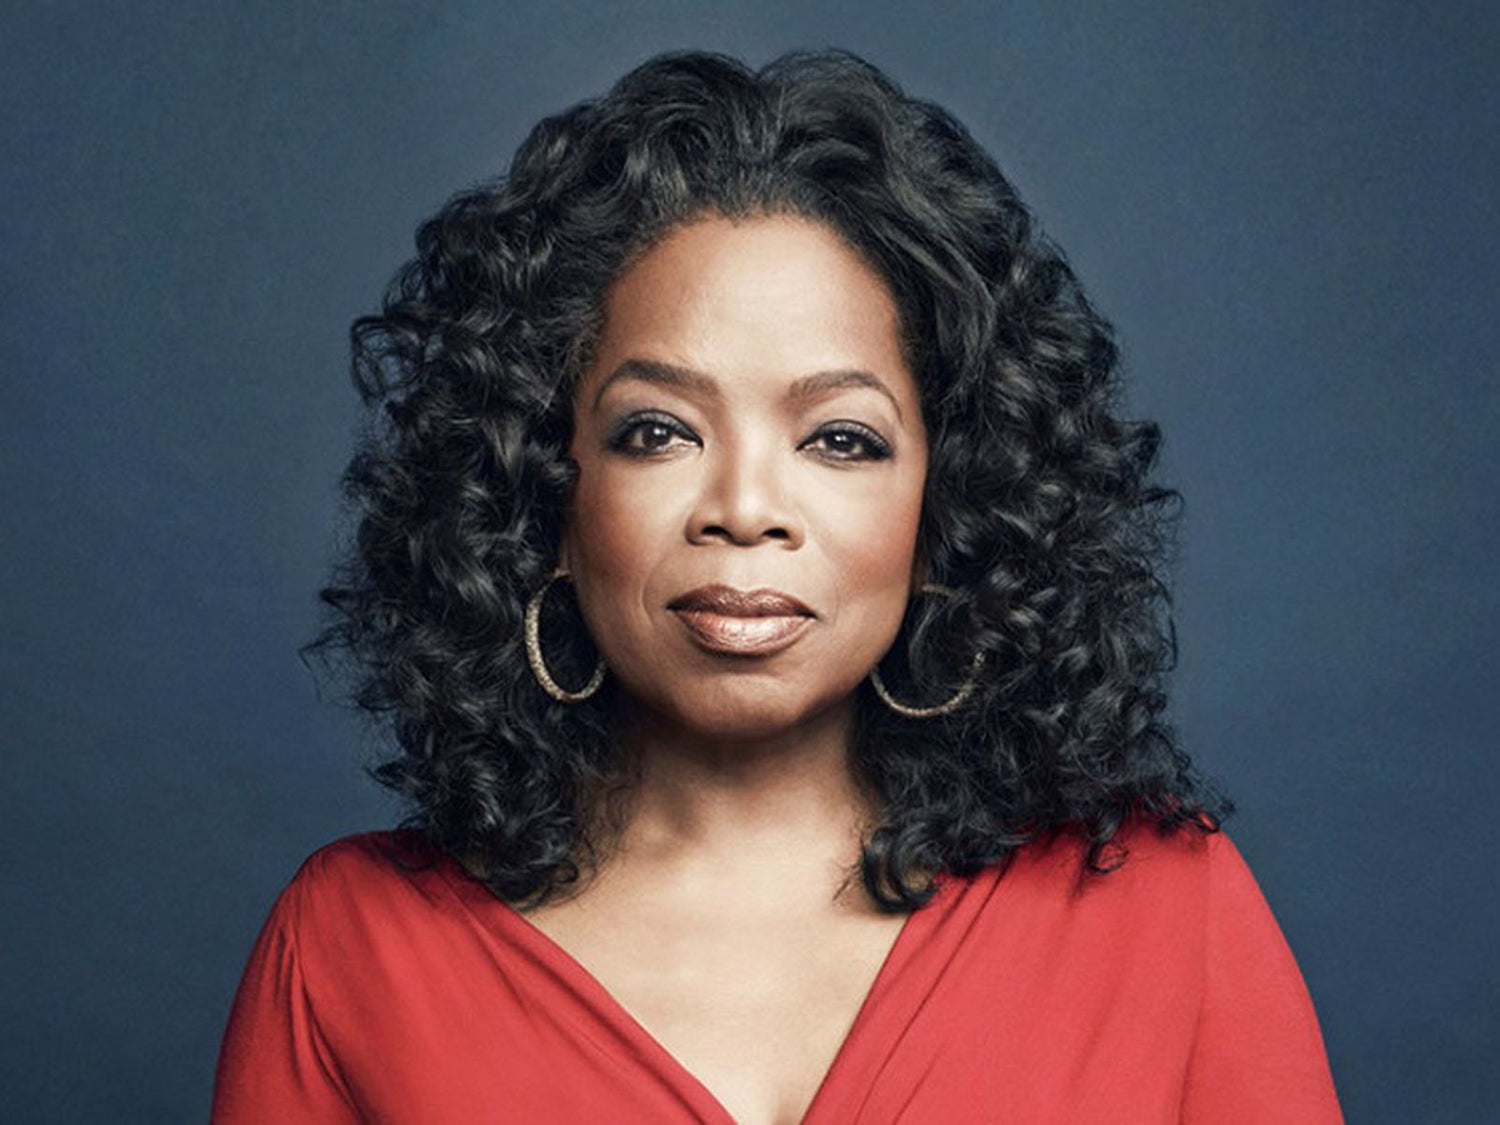 Oprah Winfrey in a red dress.